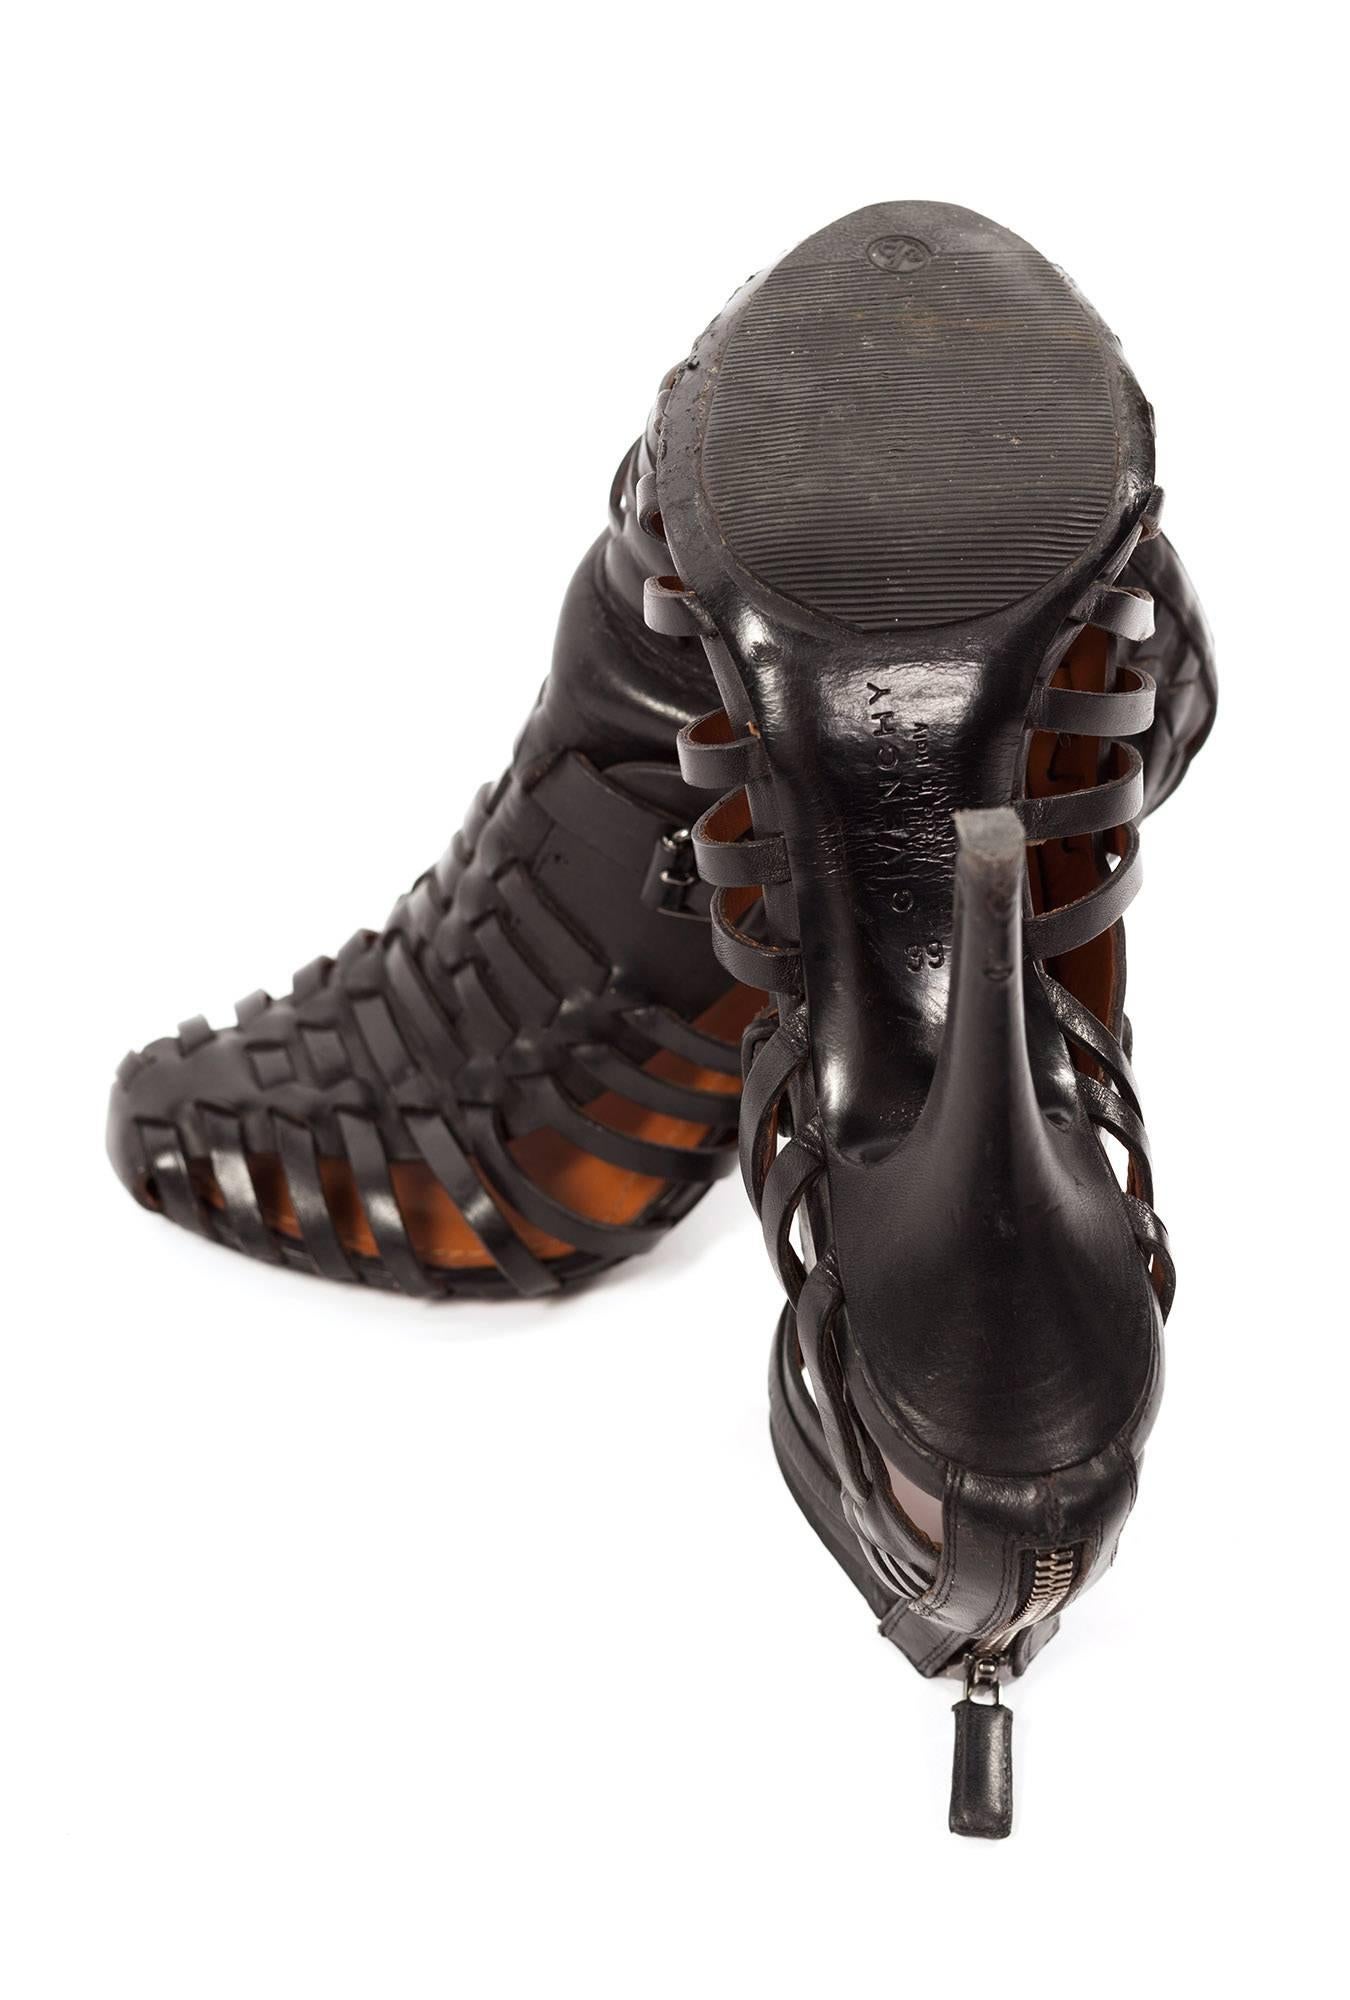 Givenchy by Ricardo Tisci leather strap gladiator heels, Sz. 8.5 2